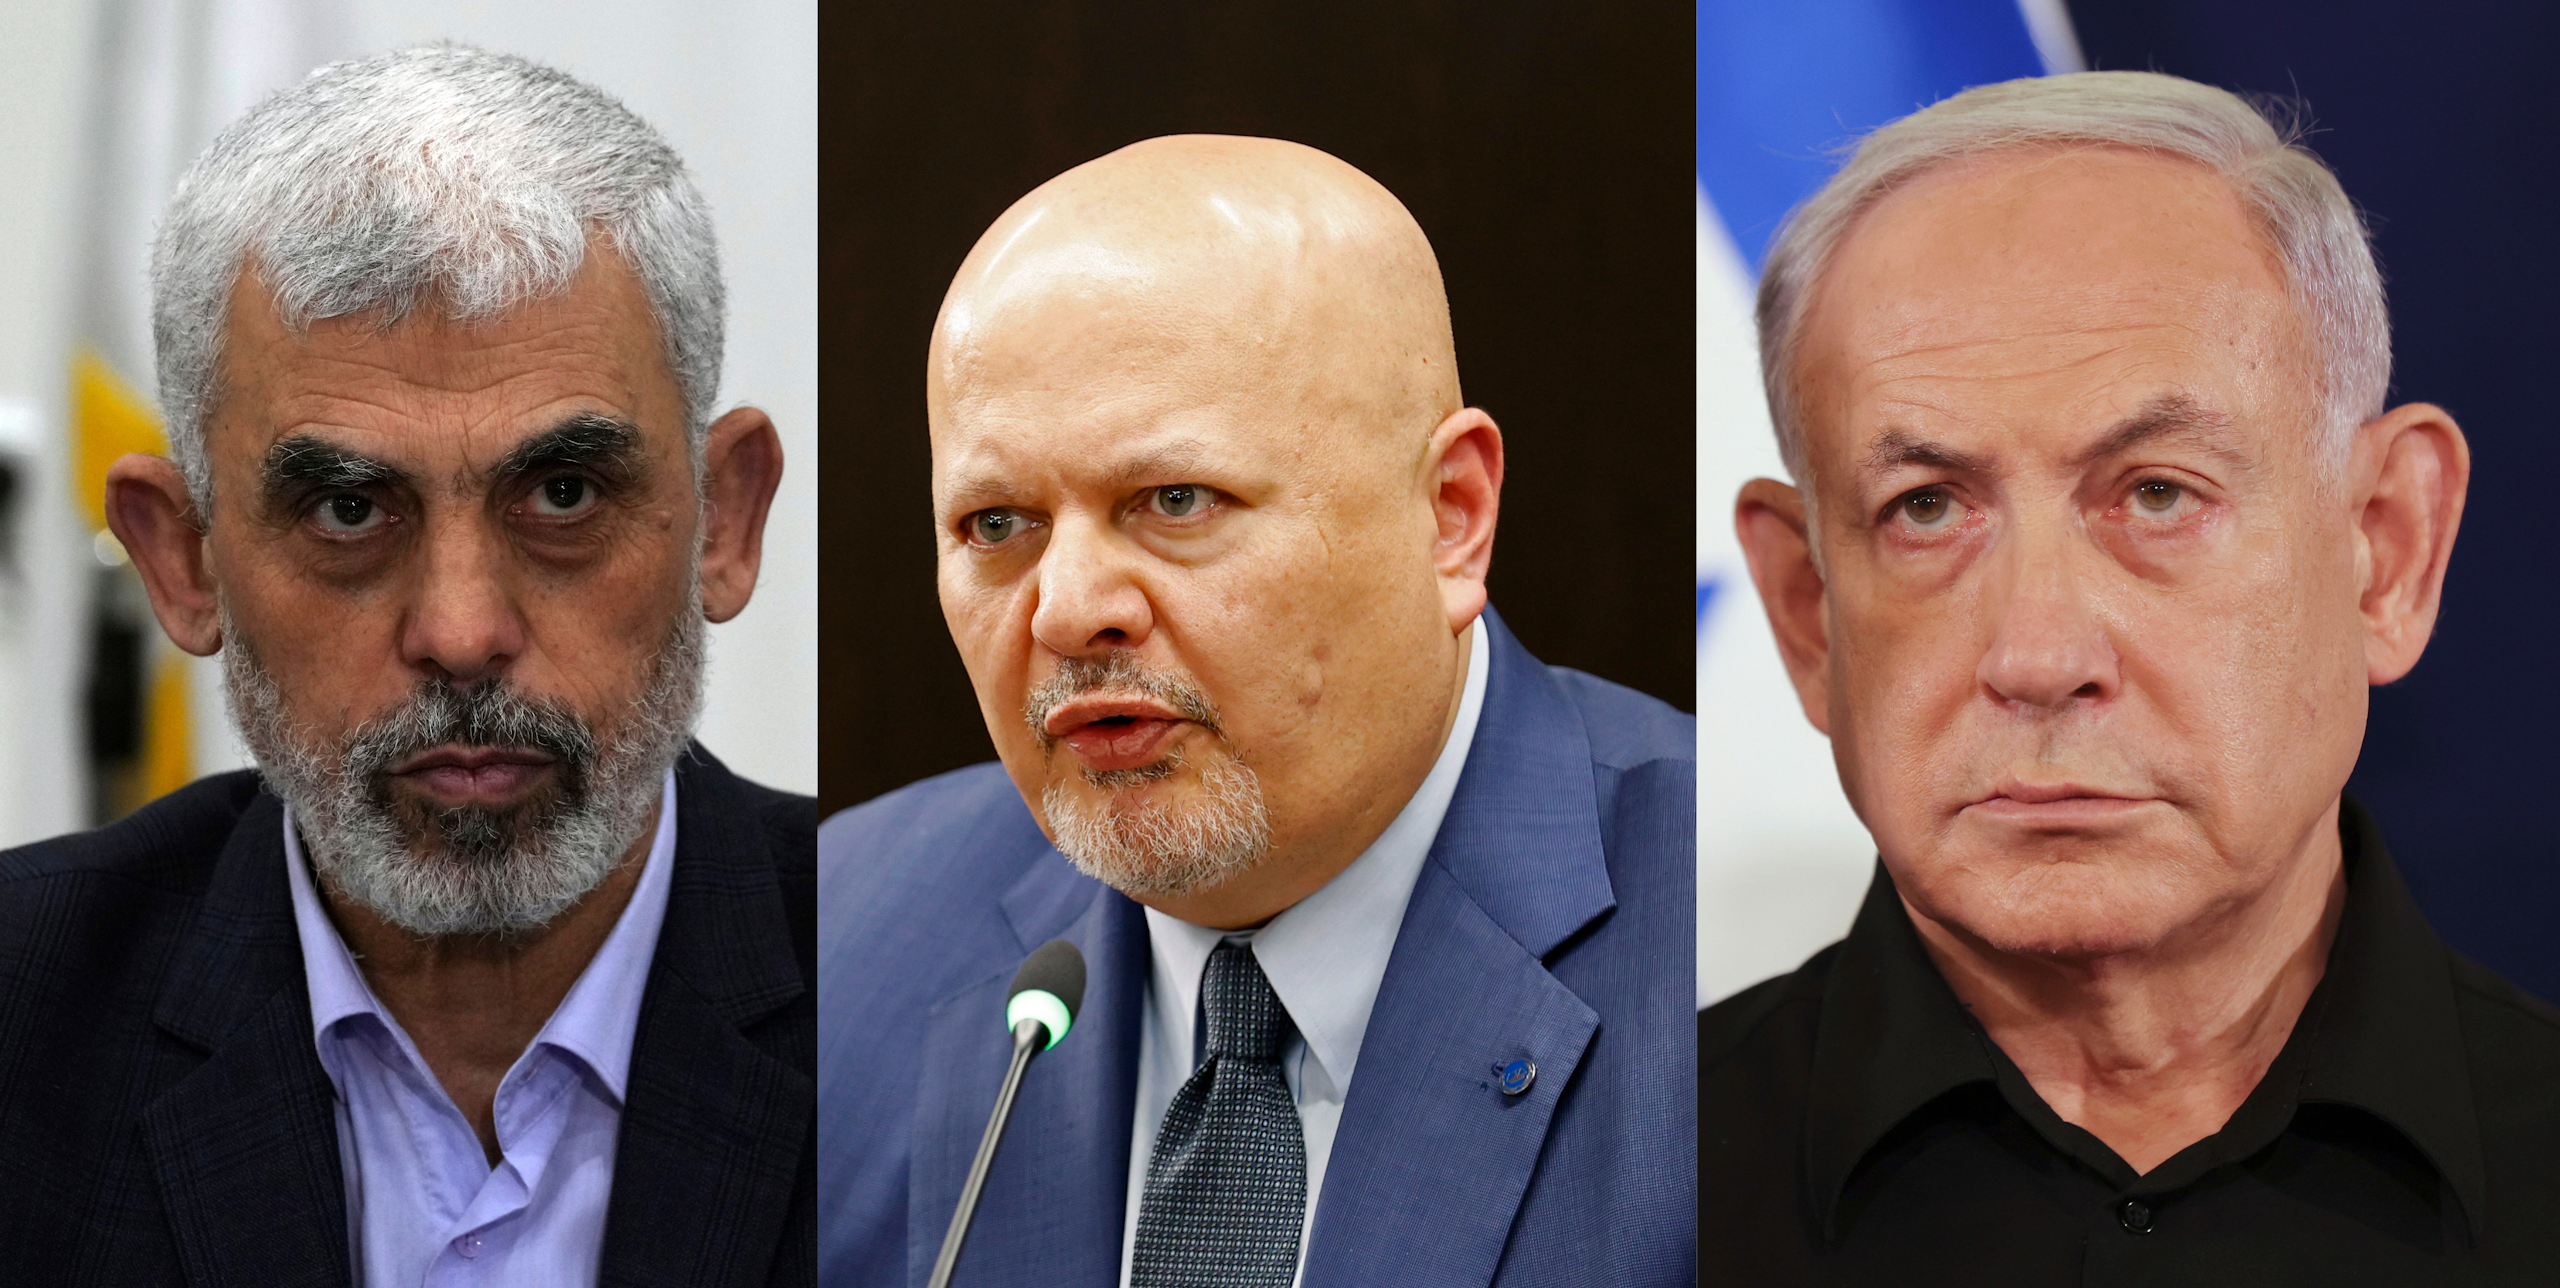 ‘Tidak ada yang kebal hukum’: surat perintah penangkapan ICC terhadap Israel-Hamas menjadi ujian besar bagi keadilan internasional